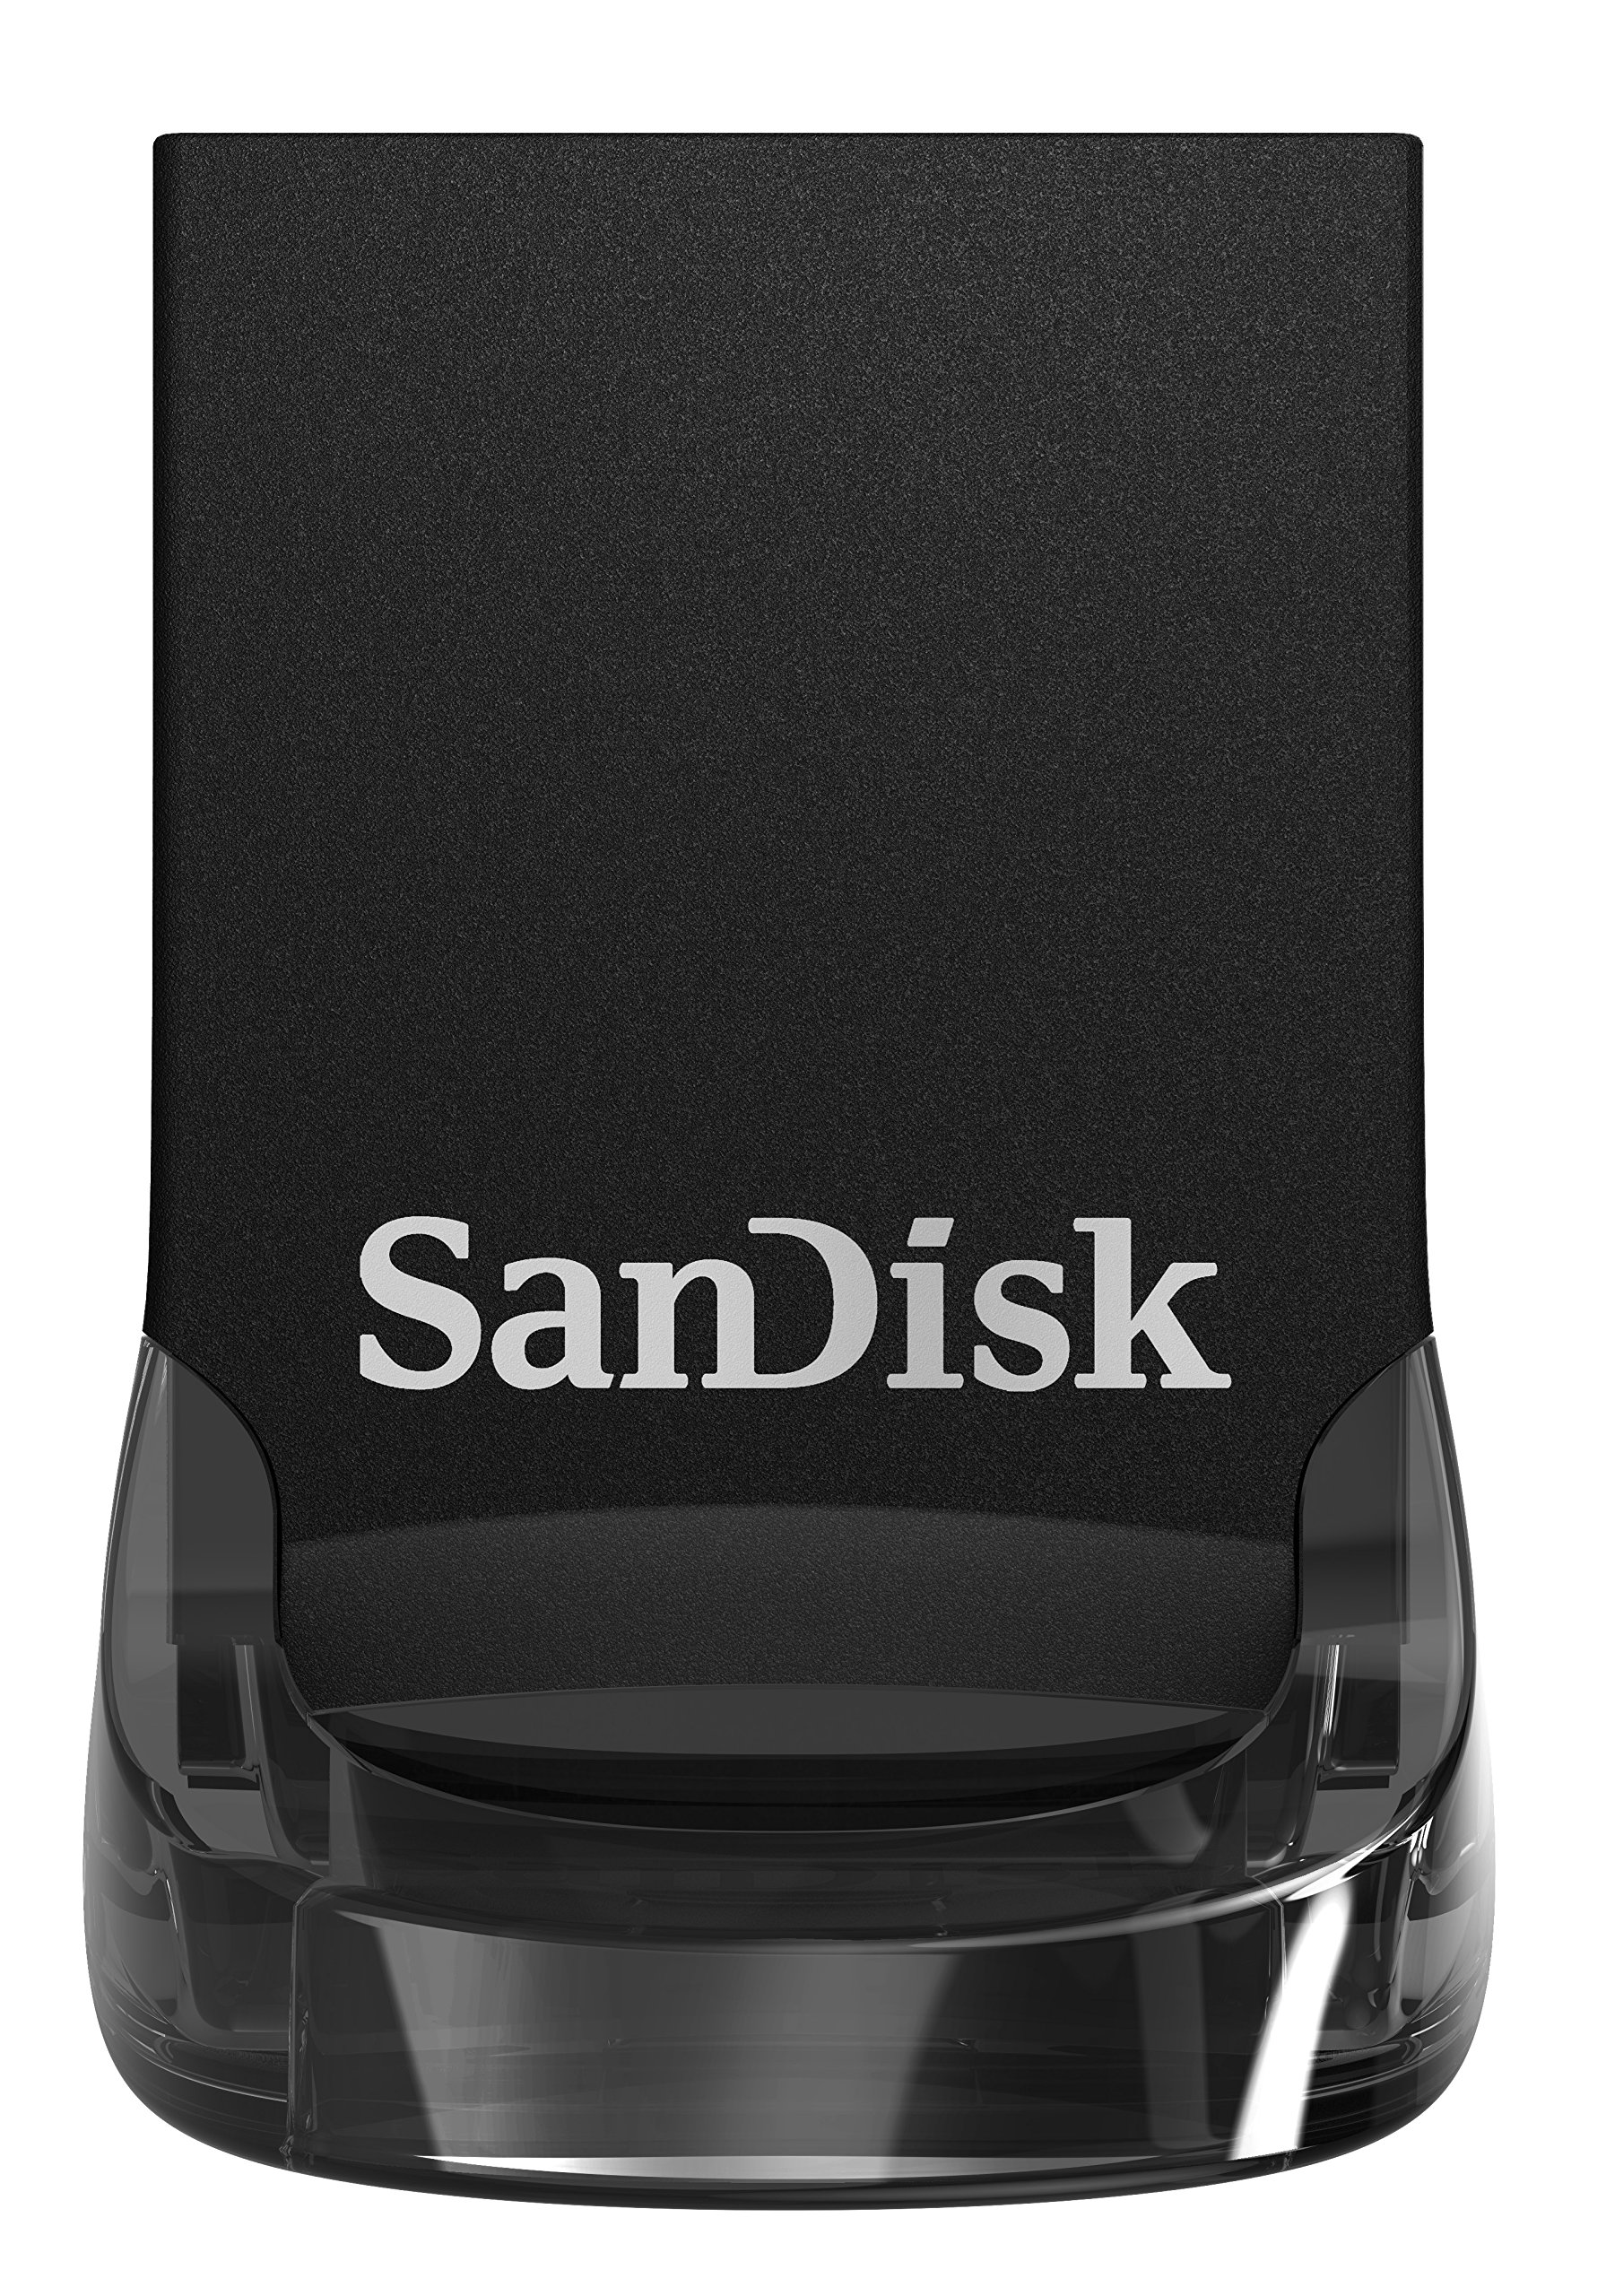 SanDisk 128GB Ultra Fit USB 3.1 Flash Drive - SDCZ430-128G-G46, Black